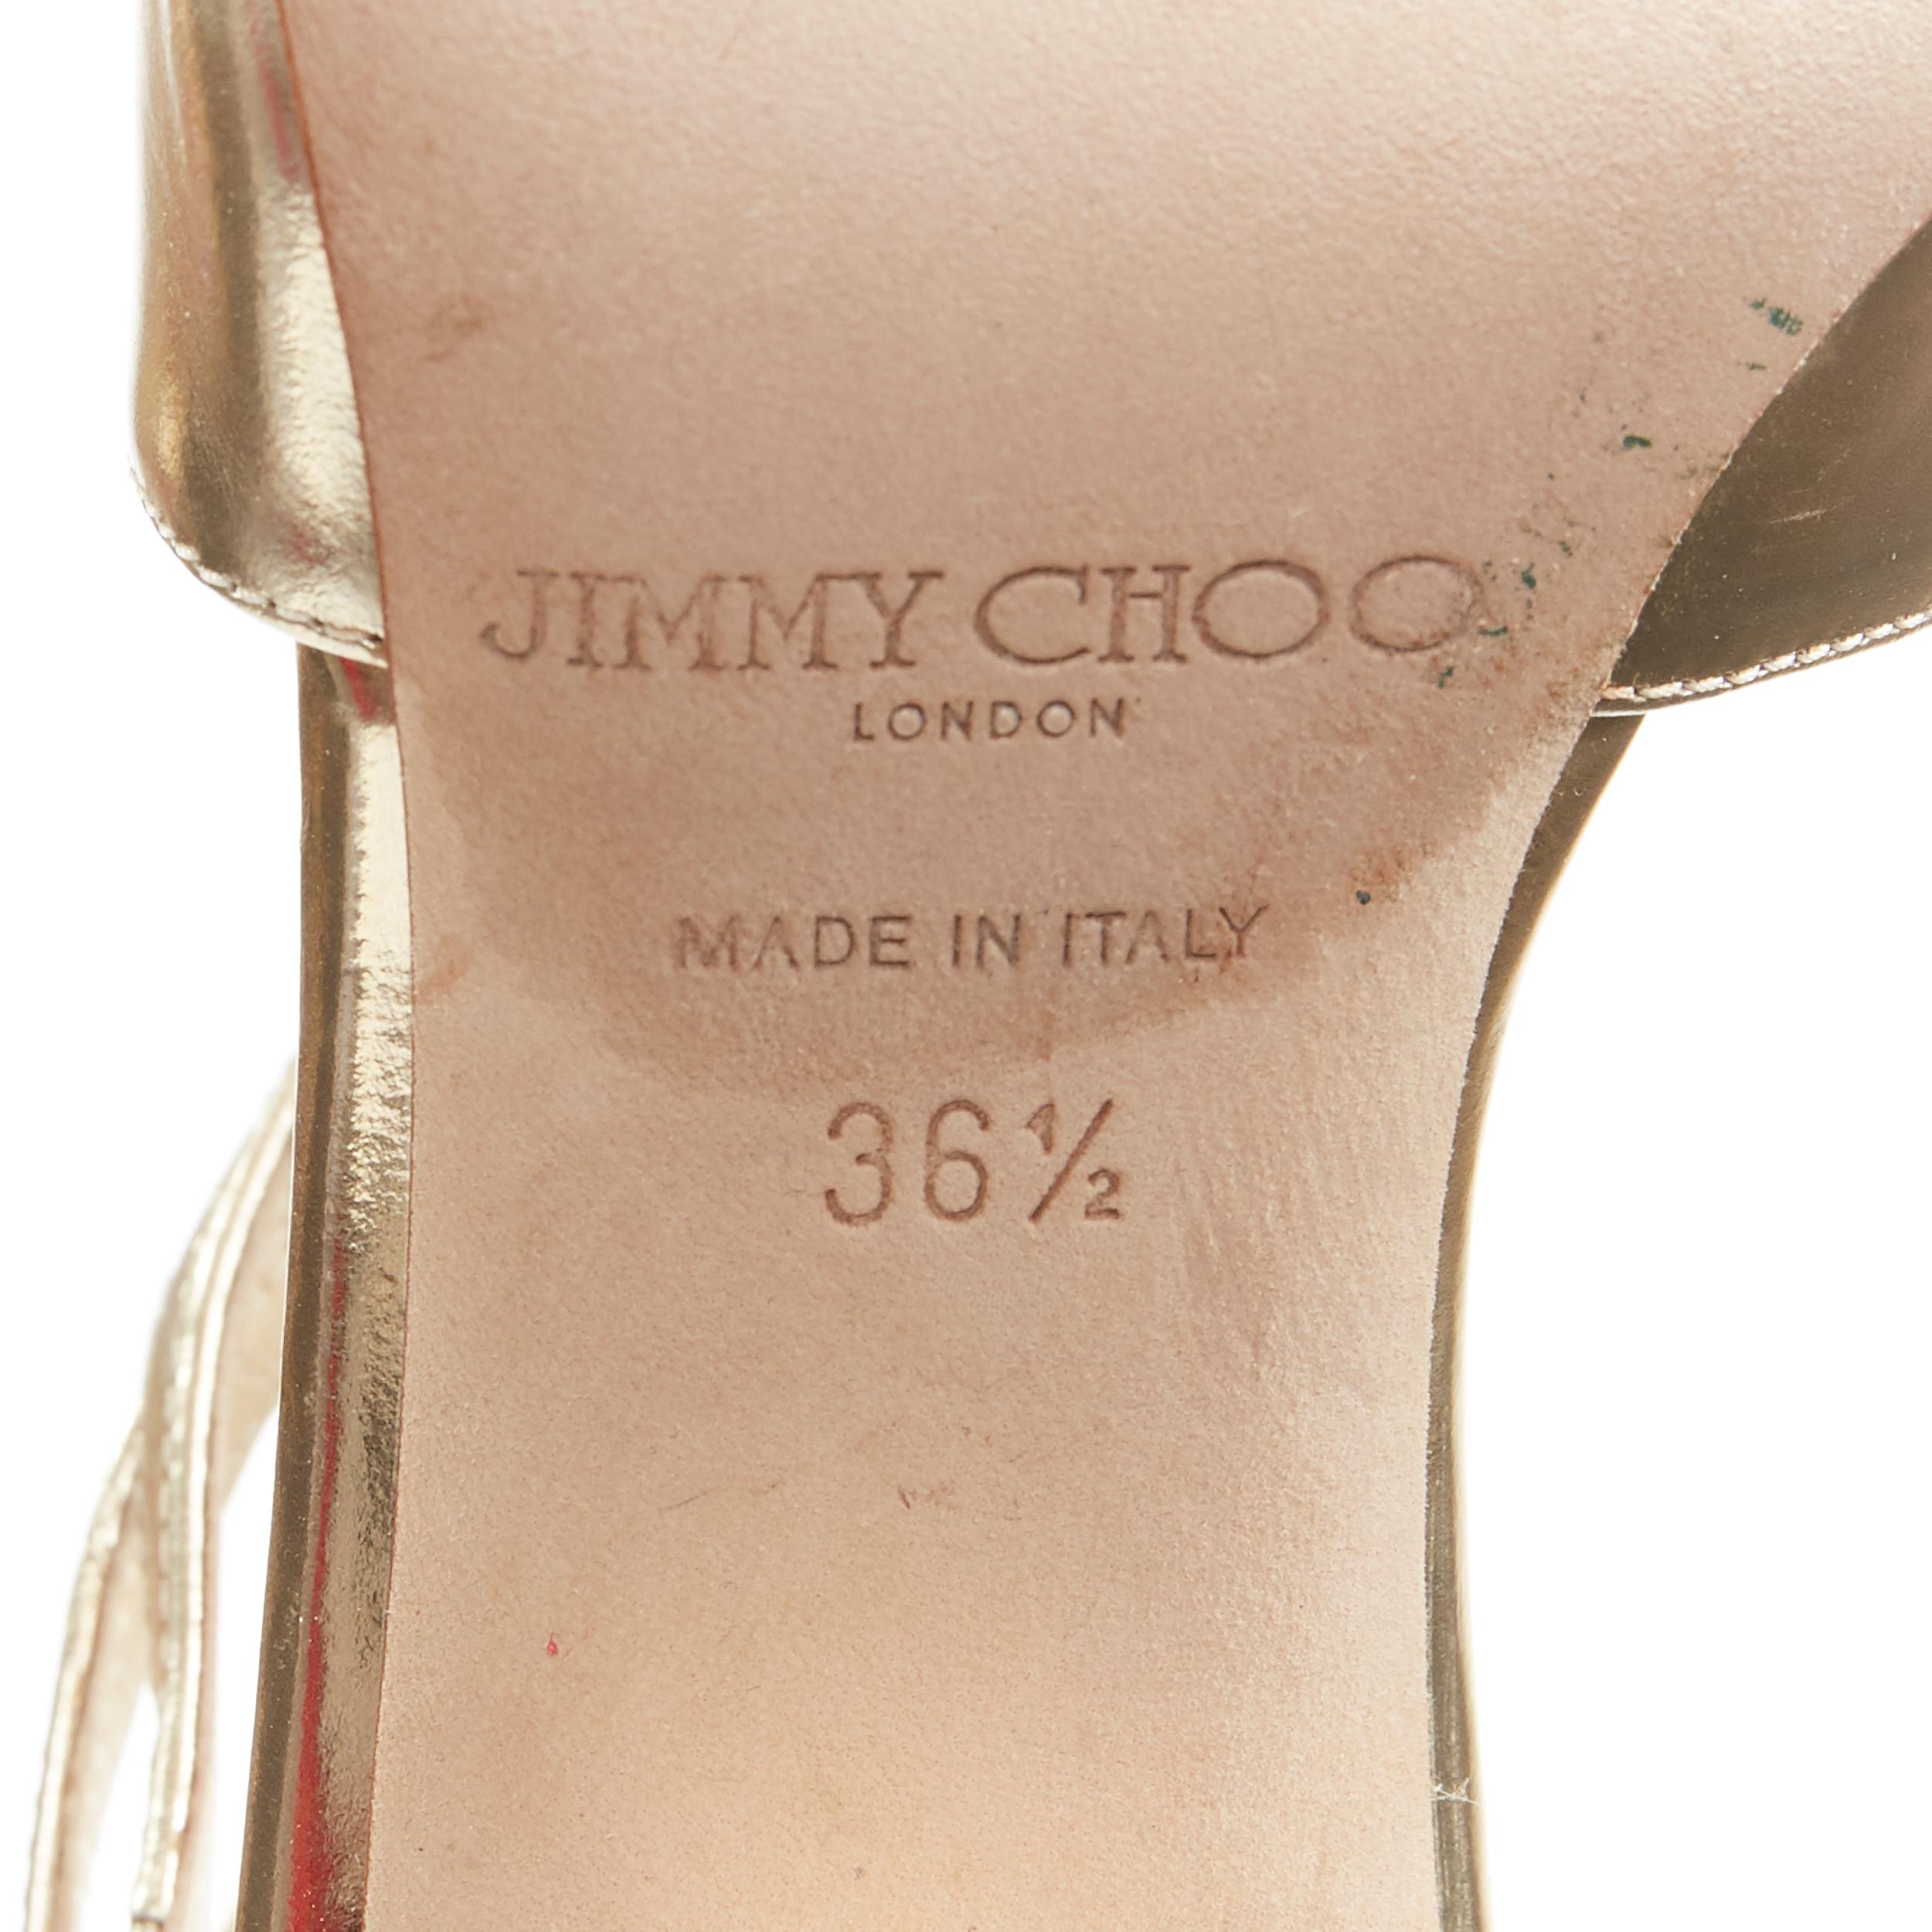 JIMMY CHOO metallic gold leather strappy ankle strap open toe heel sandal EU36.5 4